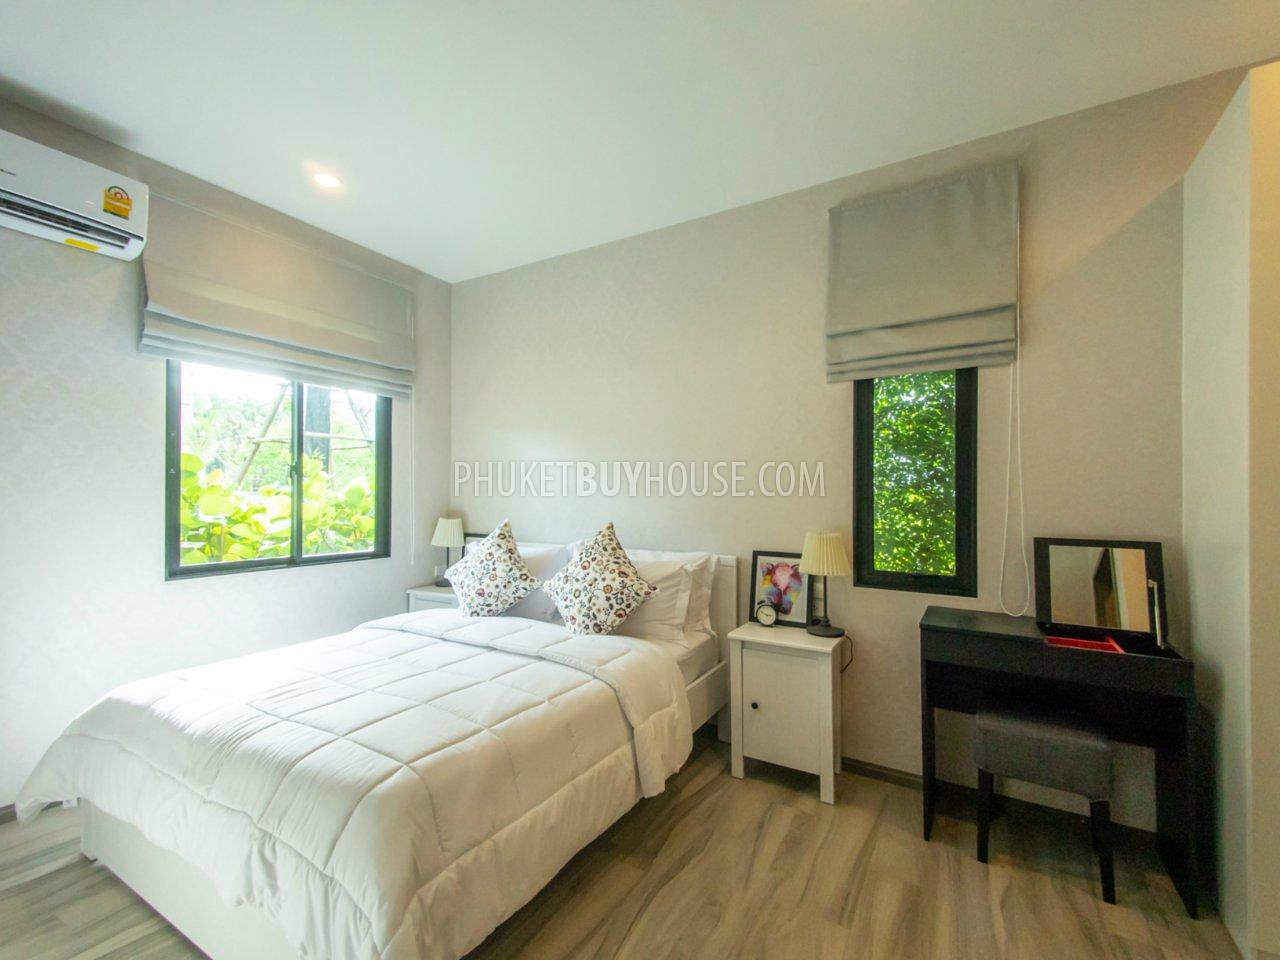 NAY5703: 1 Bedroom Apartment within 5 minutes walk to the Nai Yang beach. Photo #7